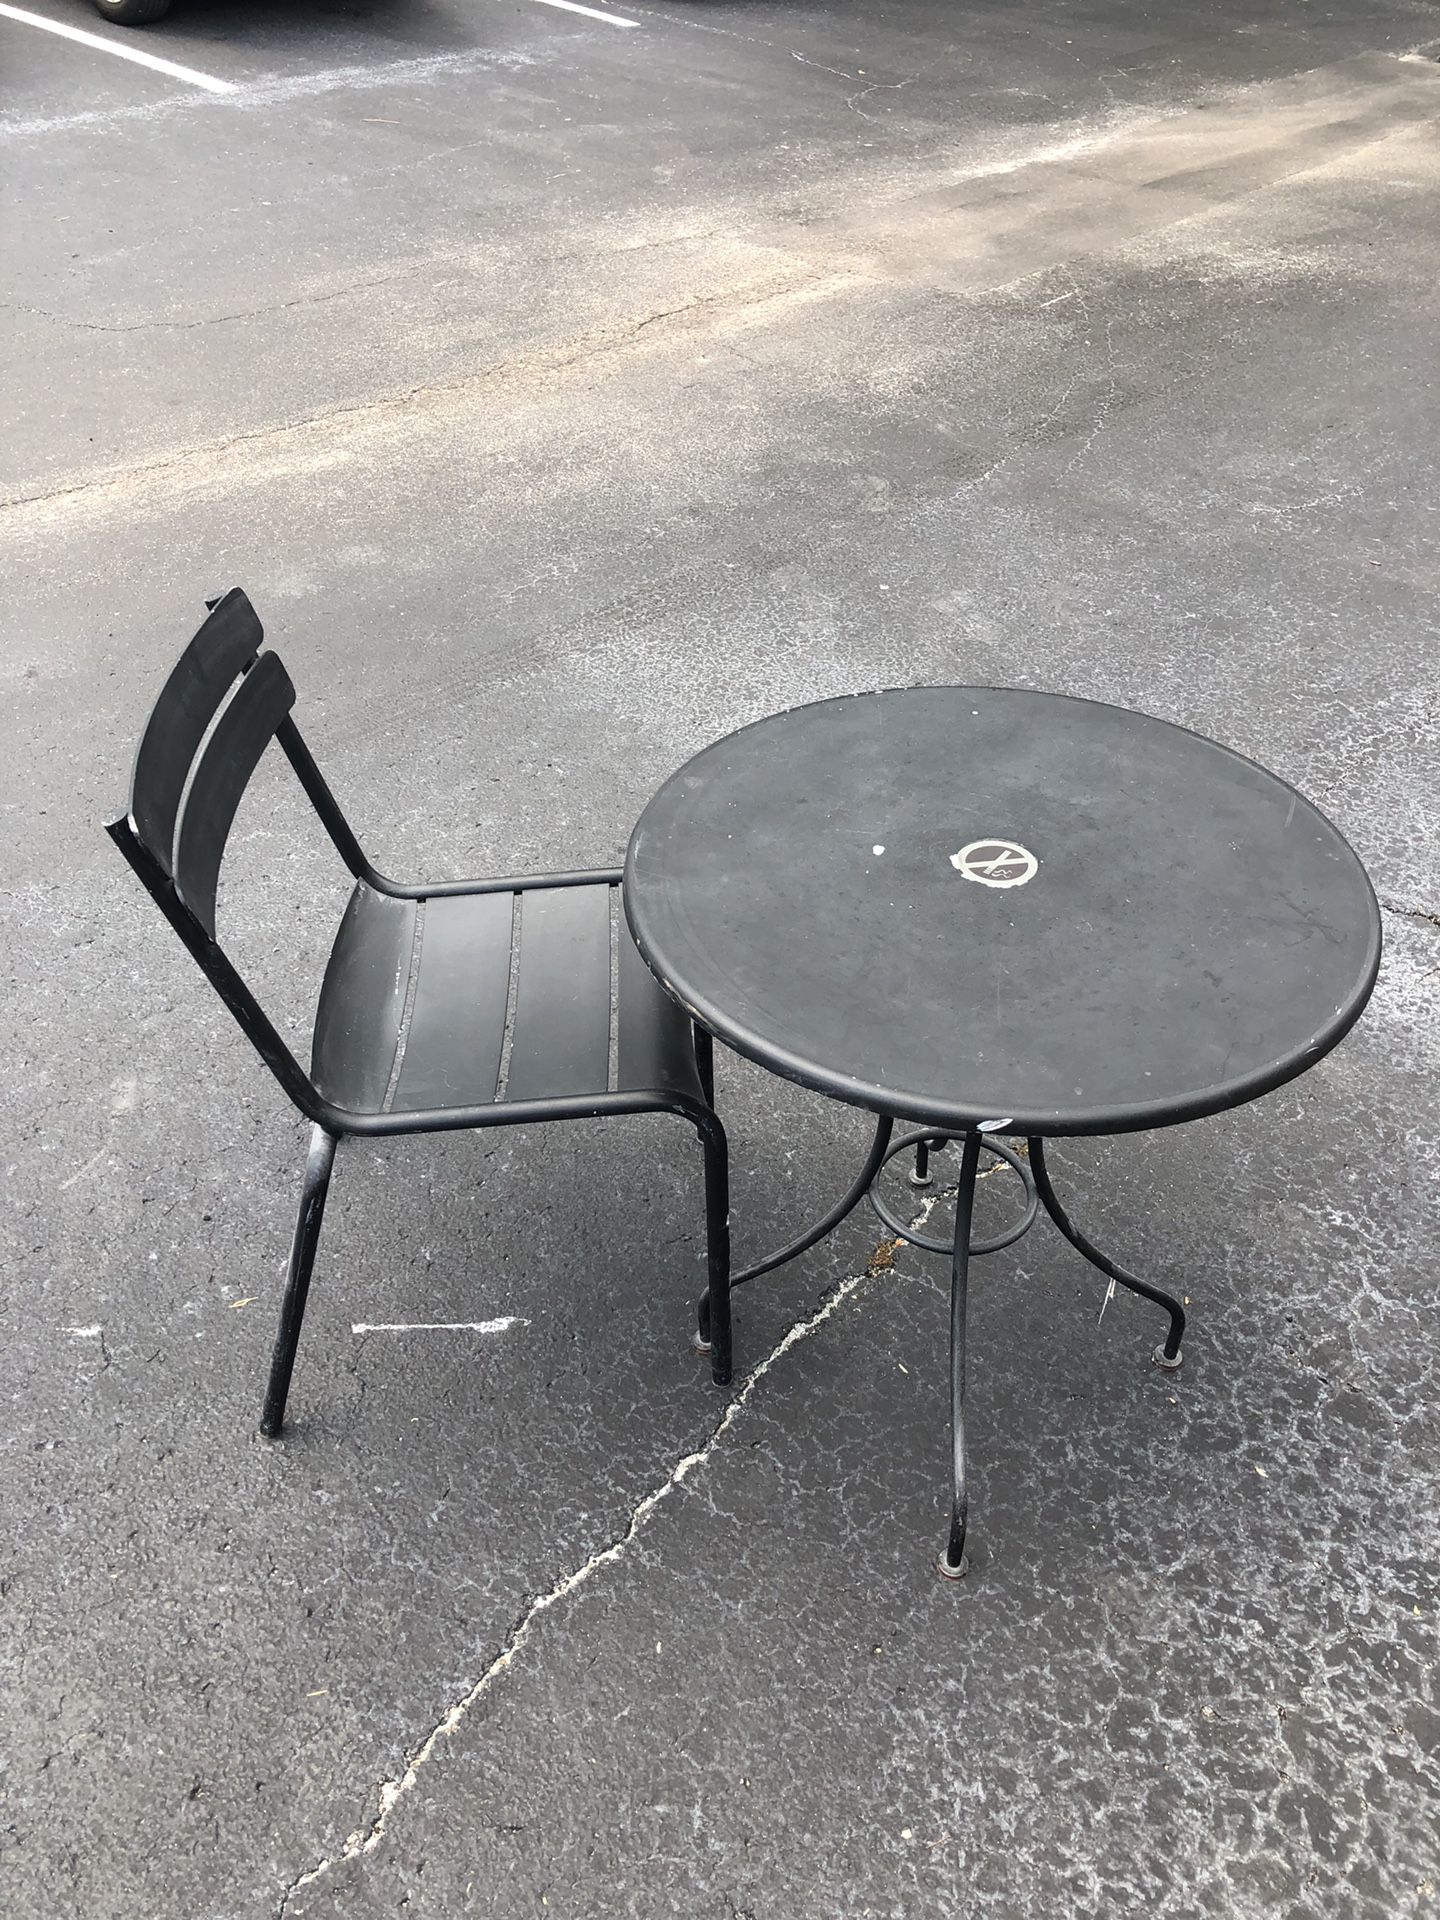 Outdoor restaurant furniture